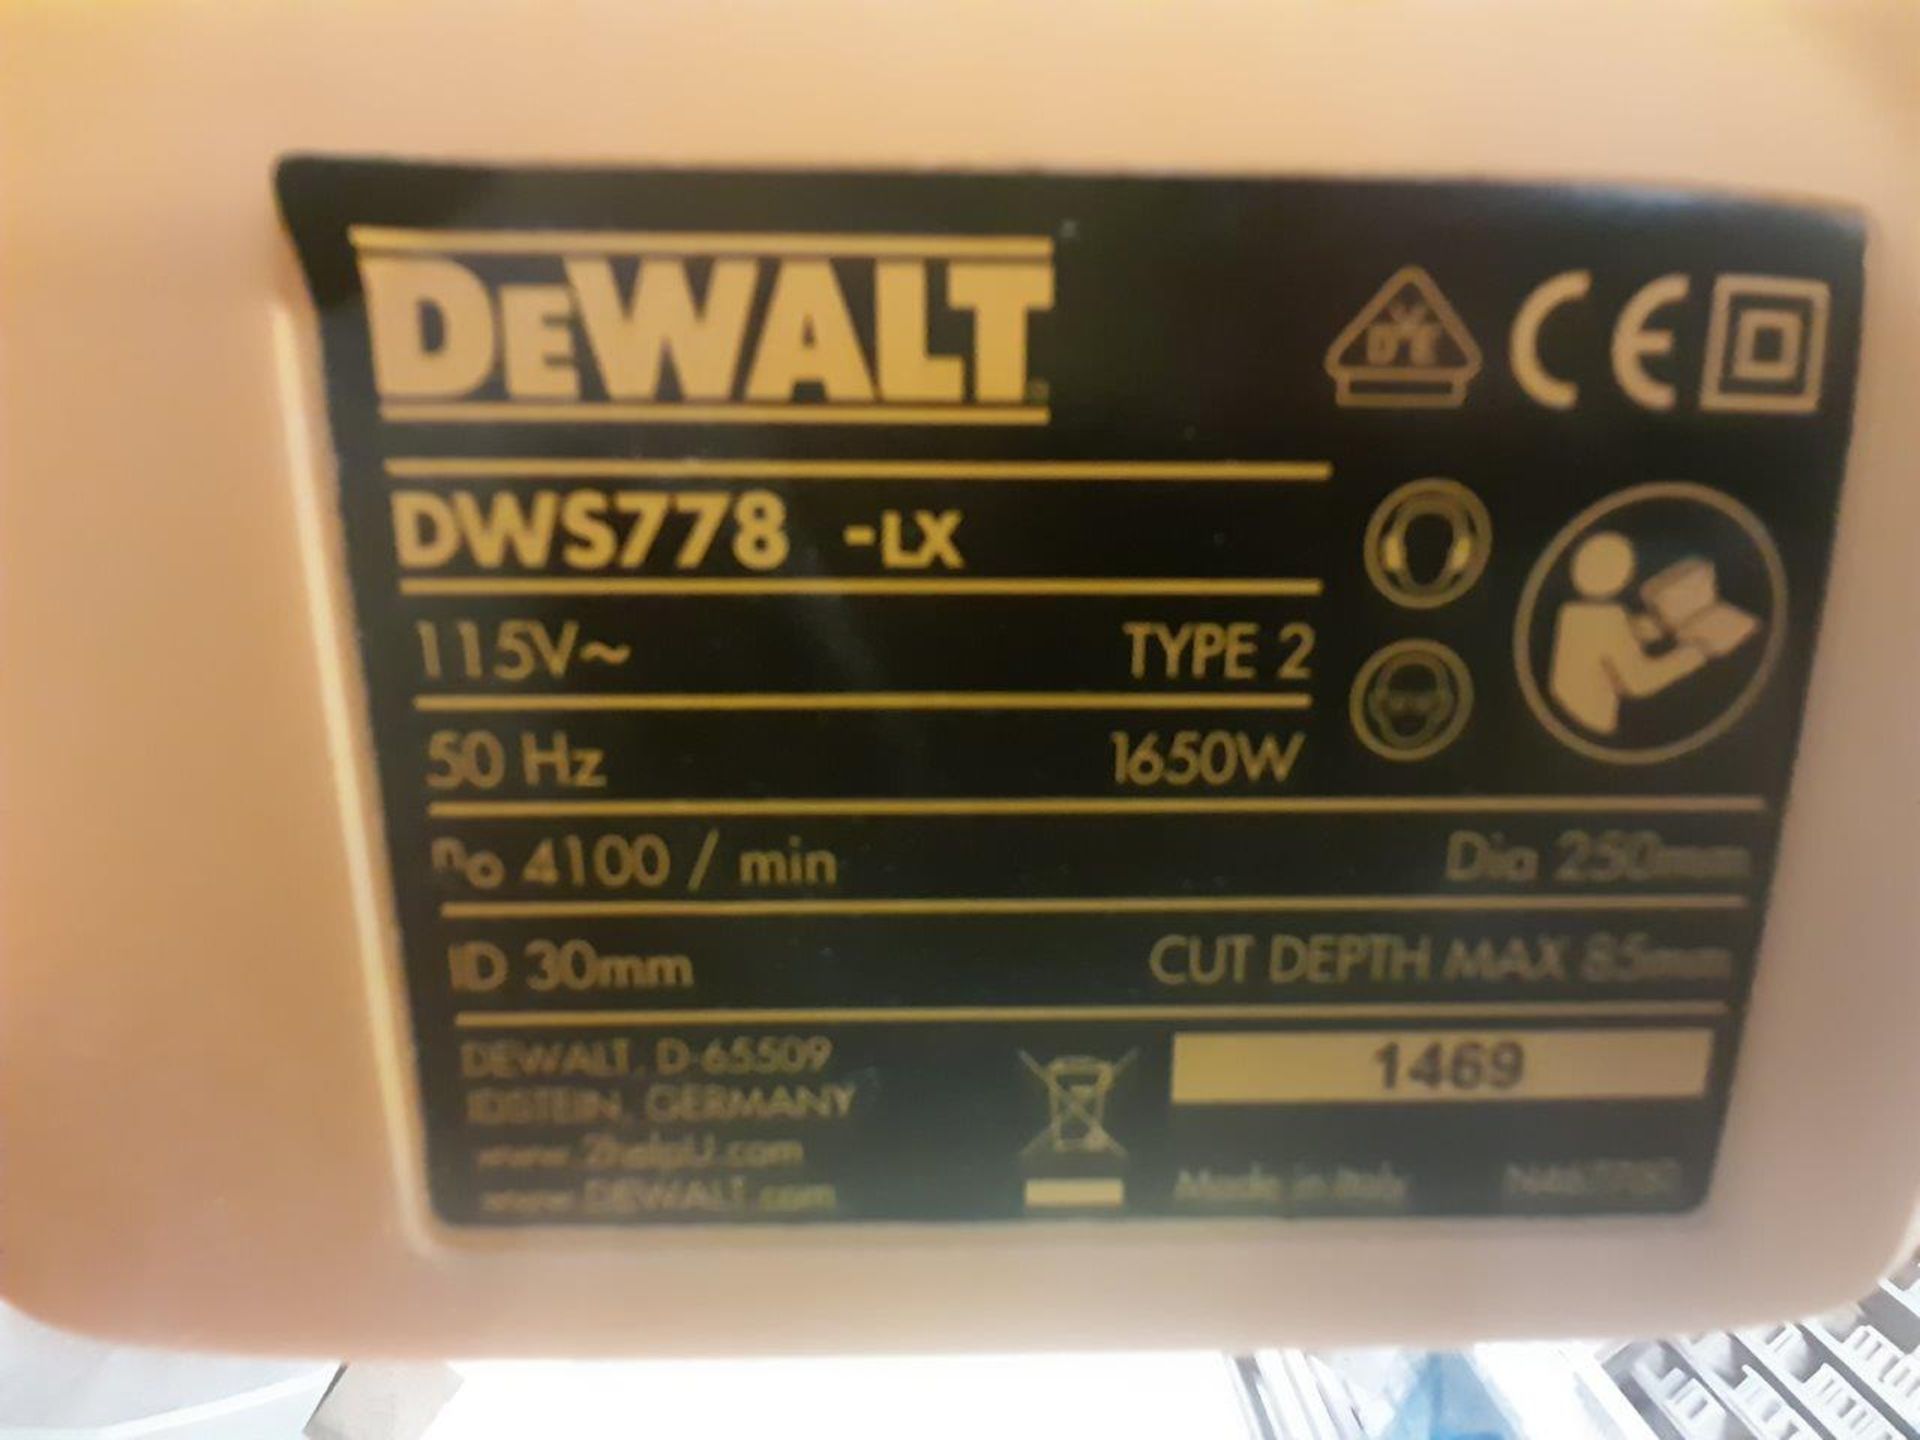 Dewalt DWS778-LX mitre saw - Image 5 of 6